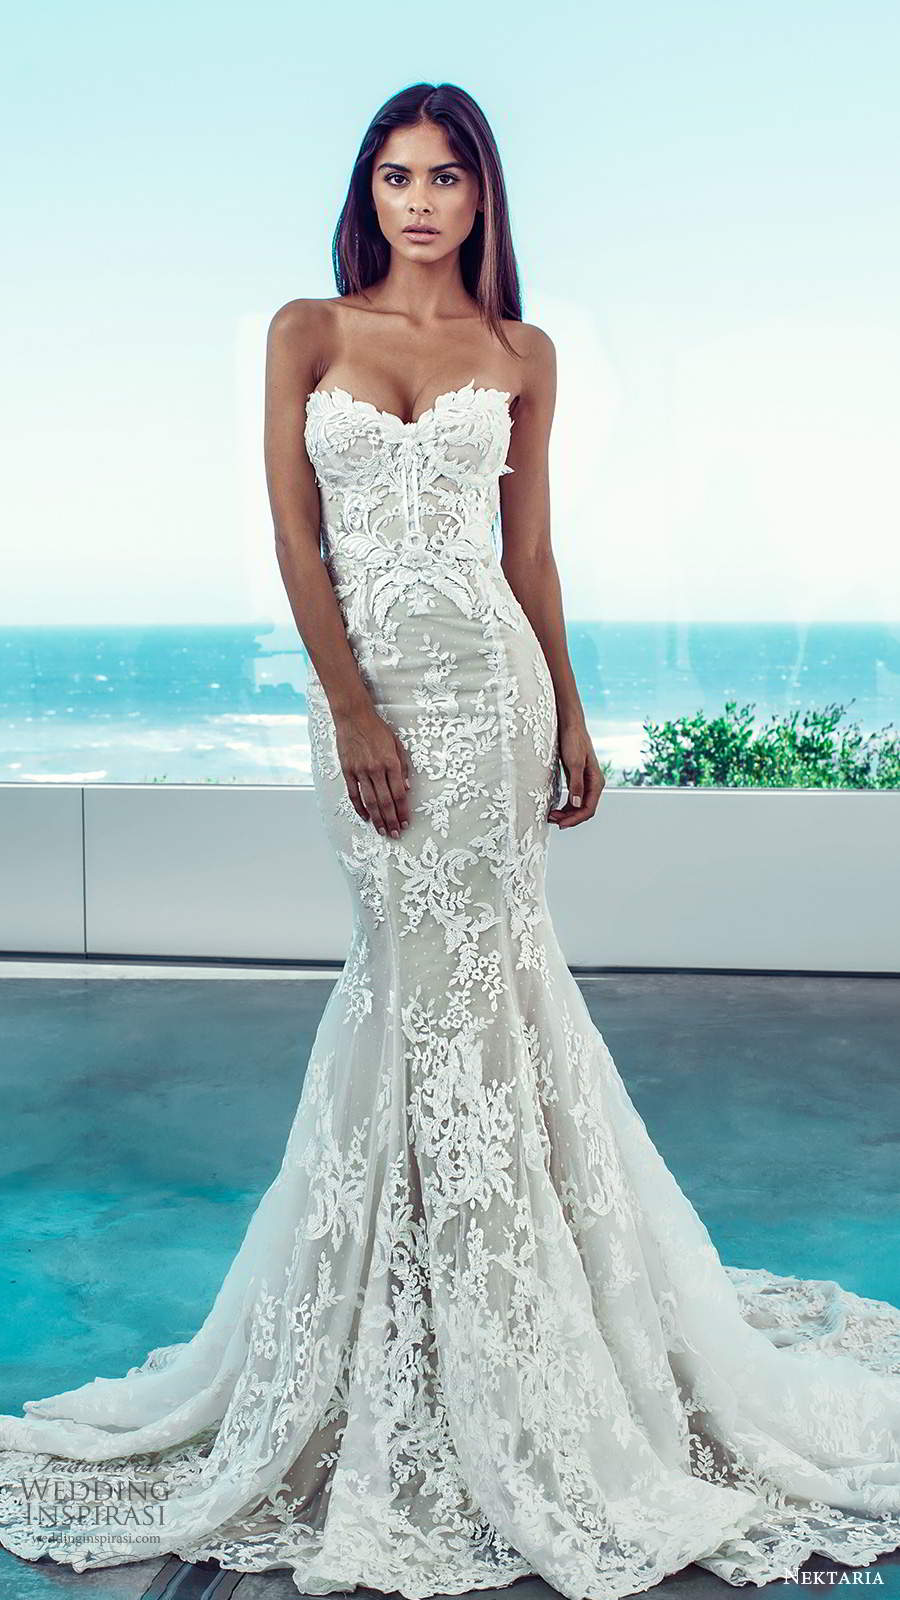 nektaria 2020 bridal strapless sweetheart fully embellished lace fit flare mermaid wedding dress chapel train (15) mv